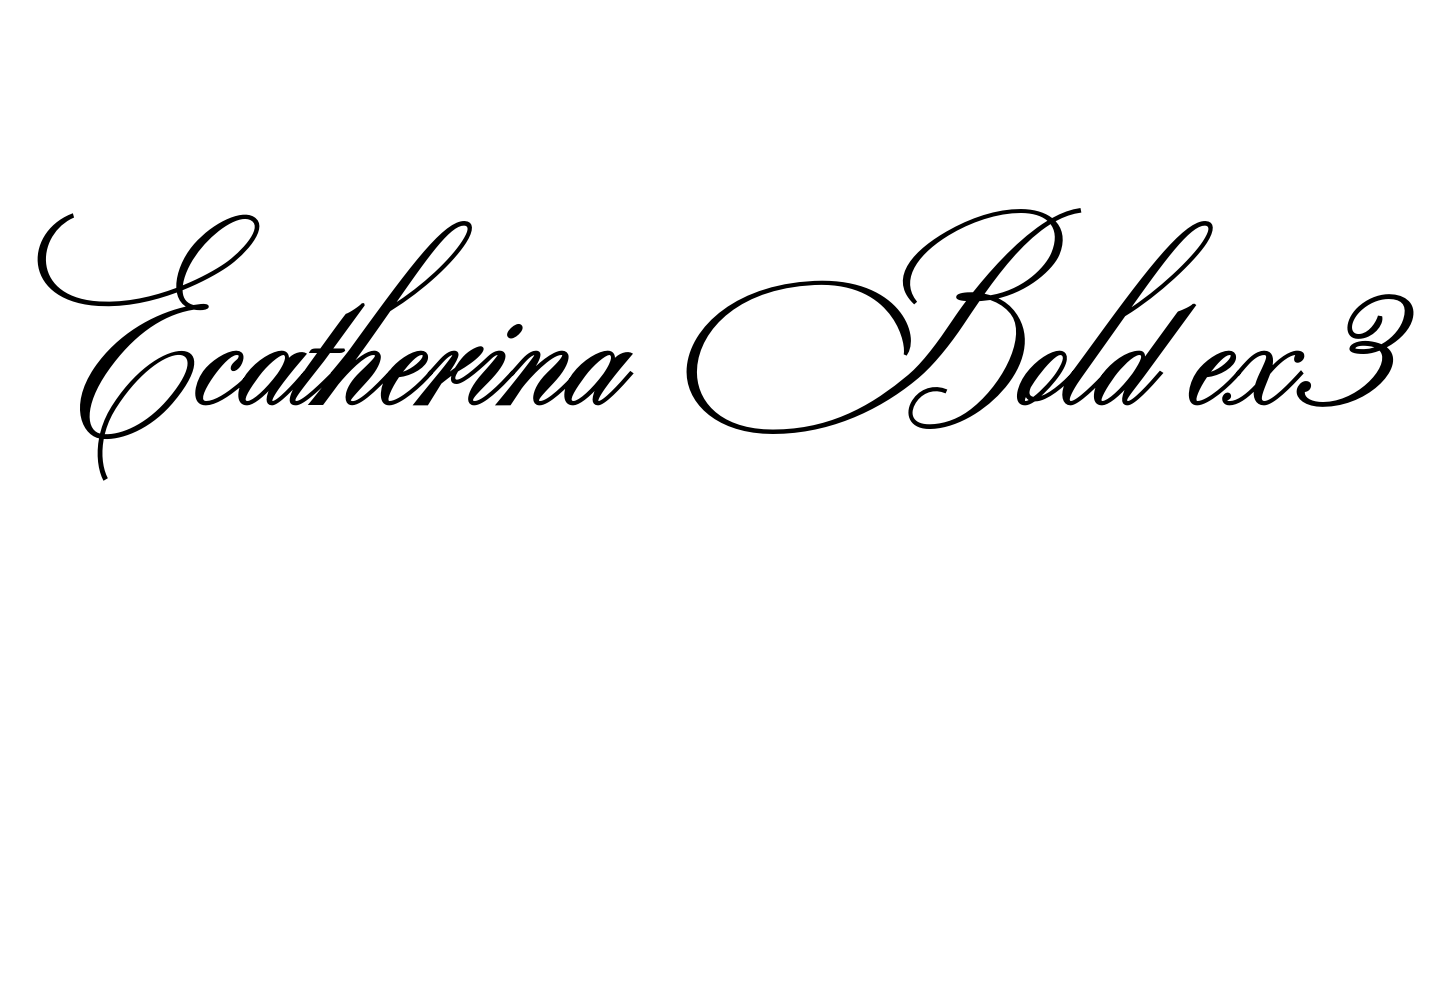 Ecatherina Bold ex3